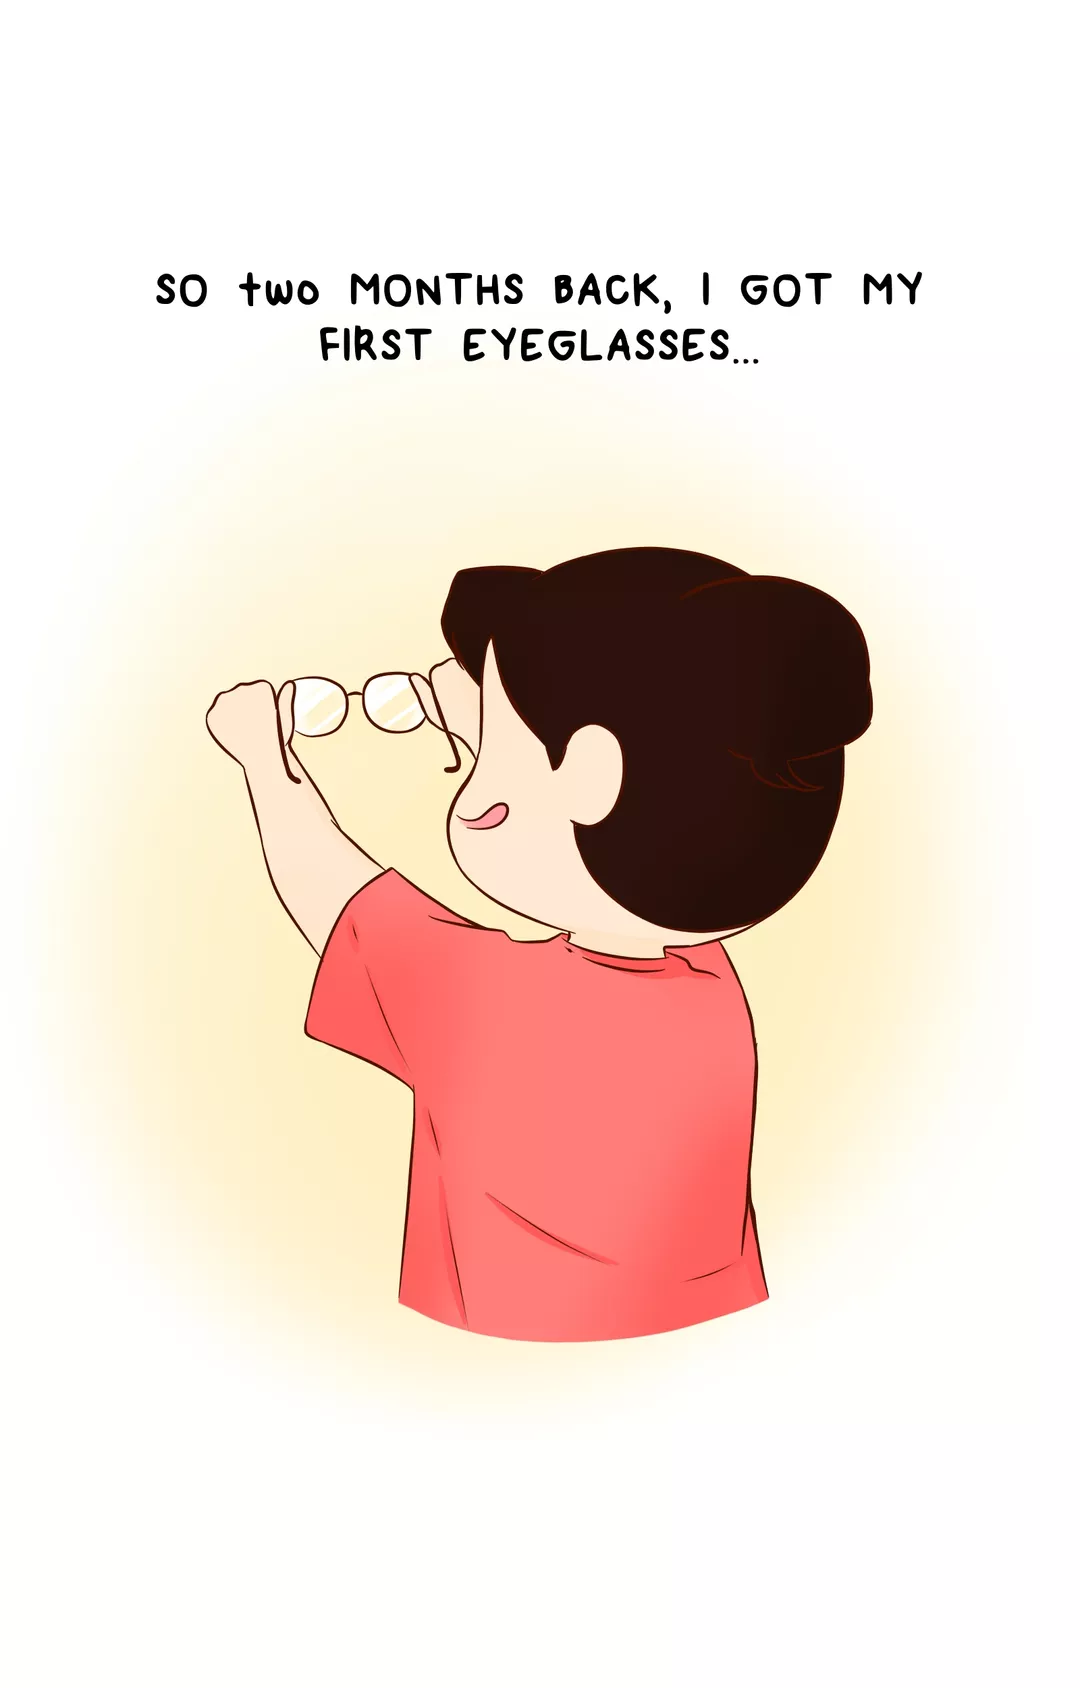 My First eyeglasses